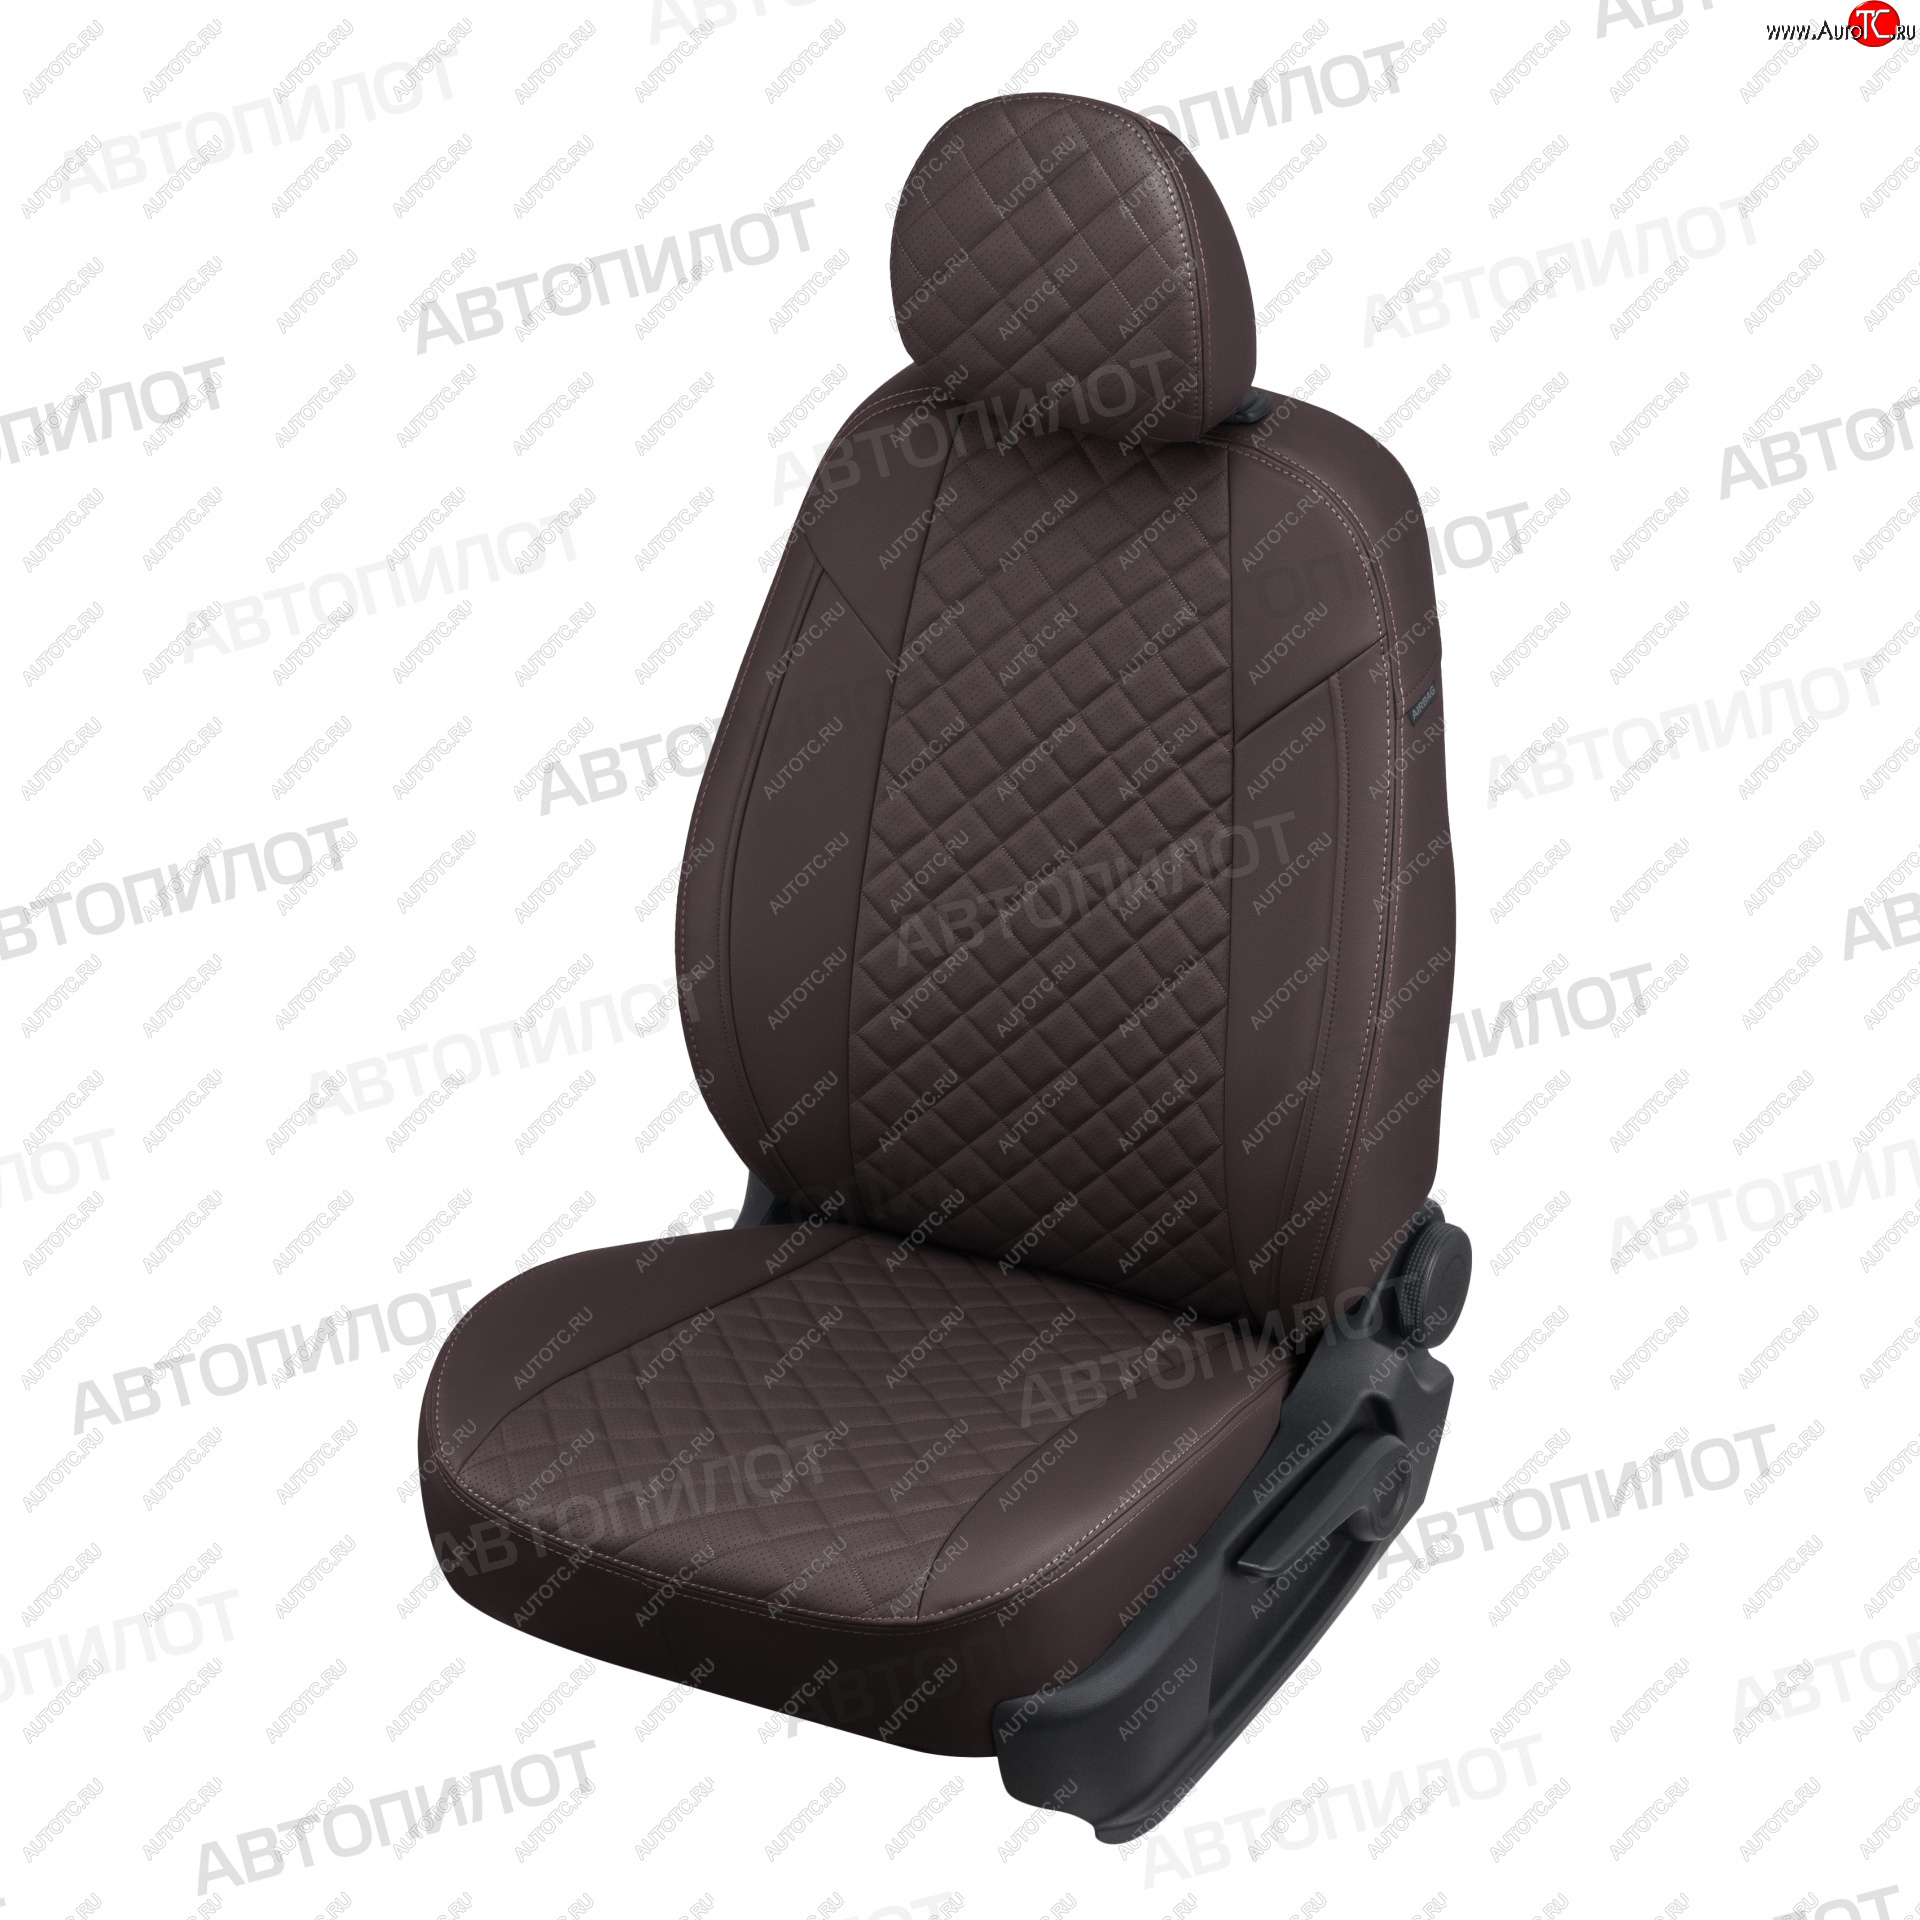 4 799 р. Чехлы сидений (3 места, экокожа) Автопилот Ромб  Ford Transit  3 (2006-2014) (шоколад)